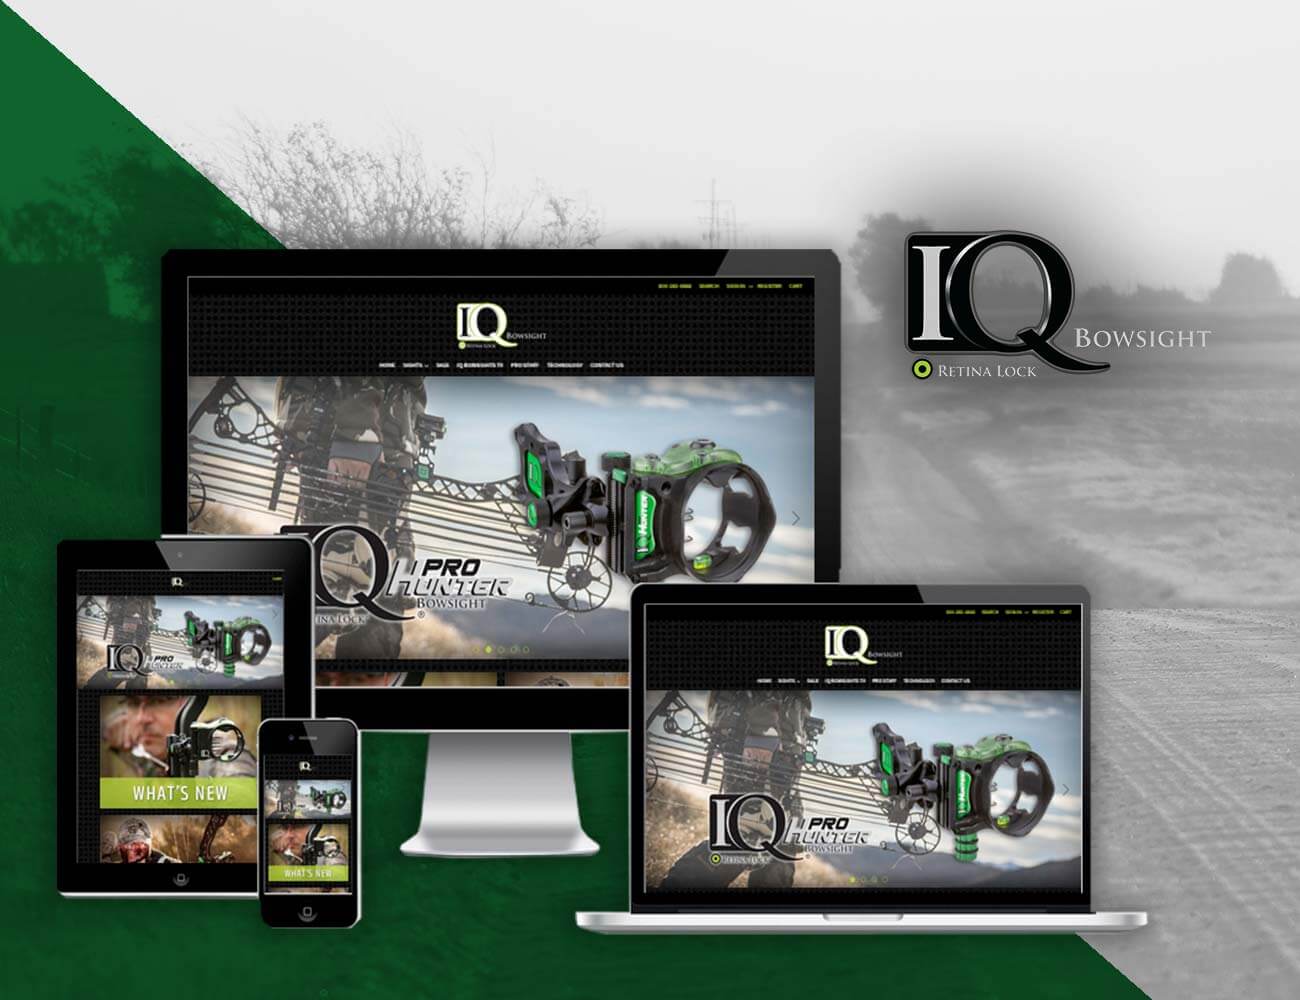 IQ Bowsight custom website design and management